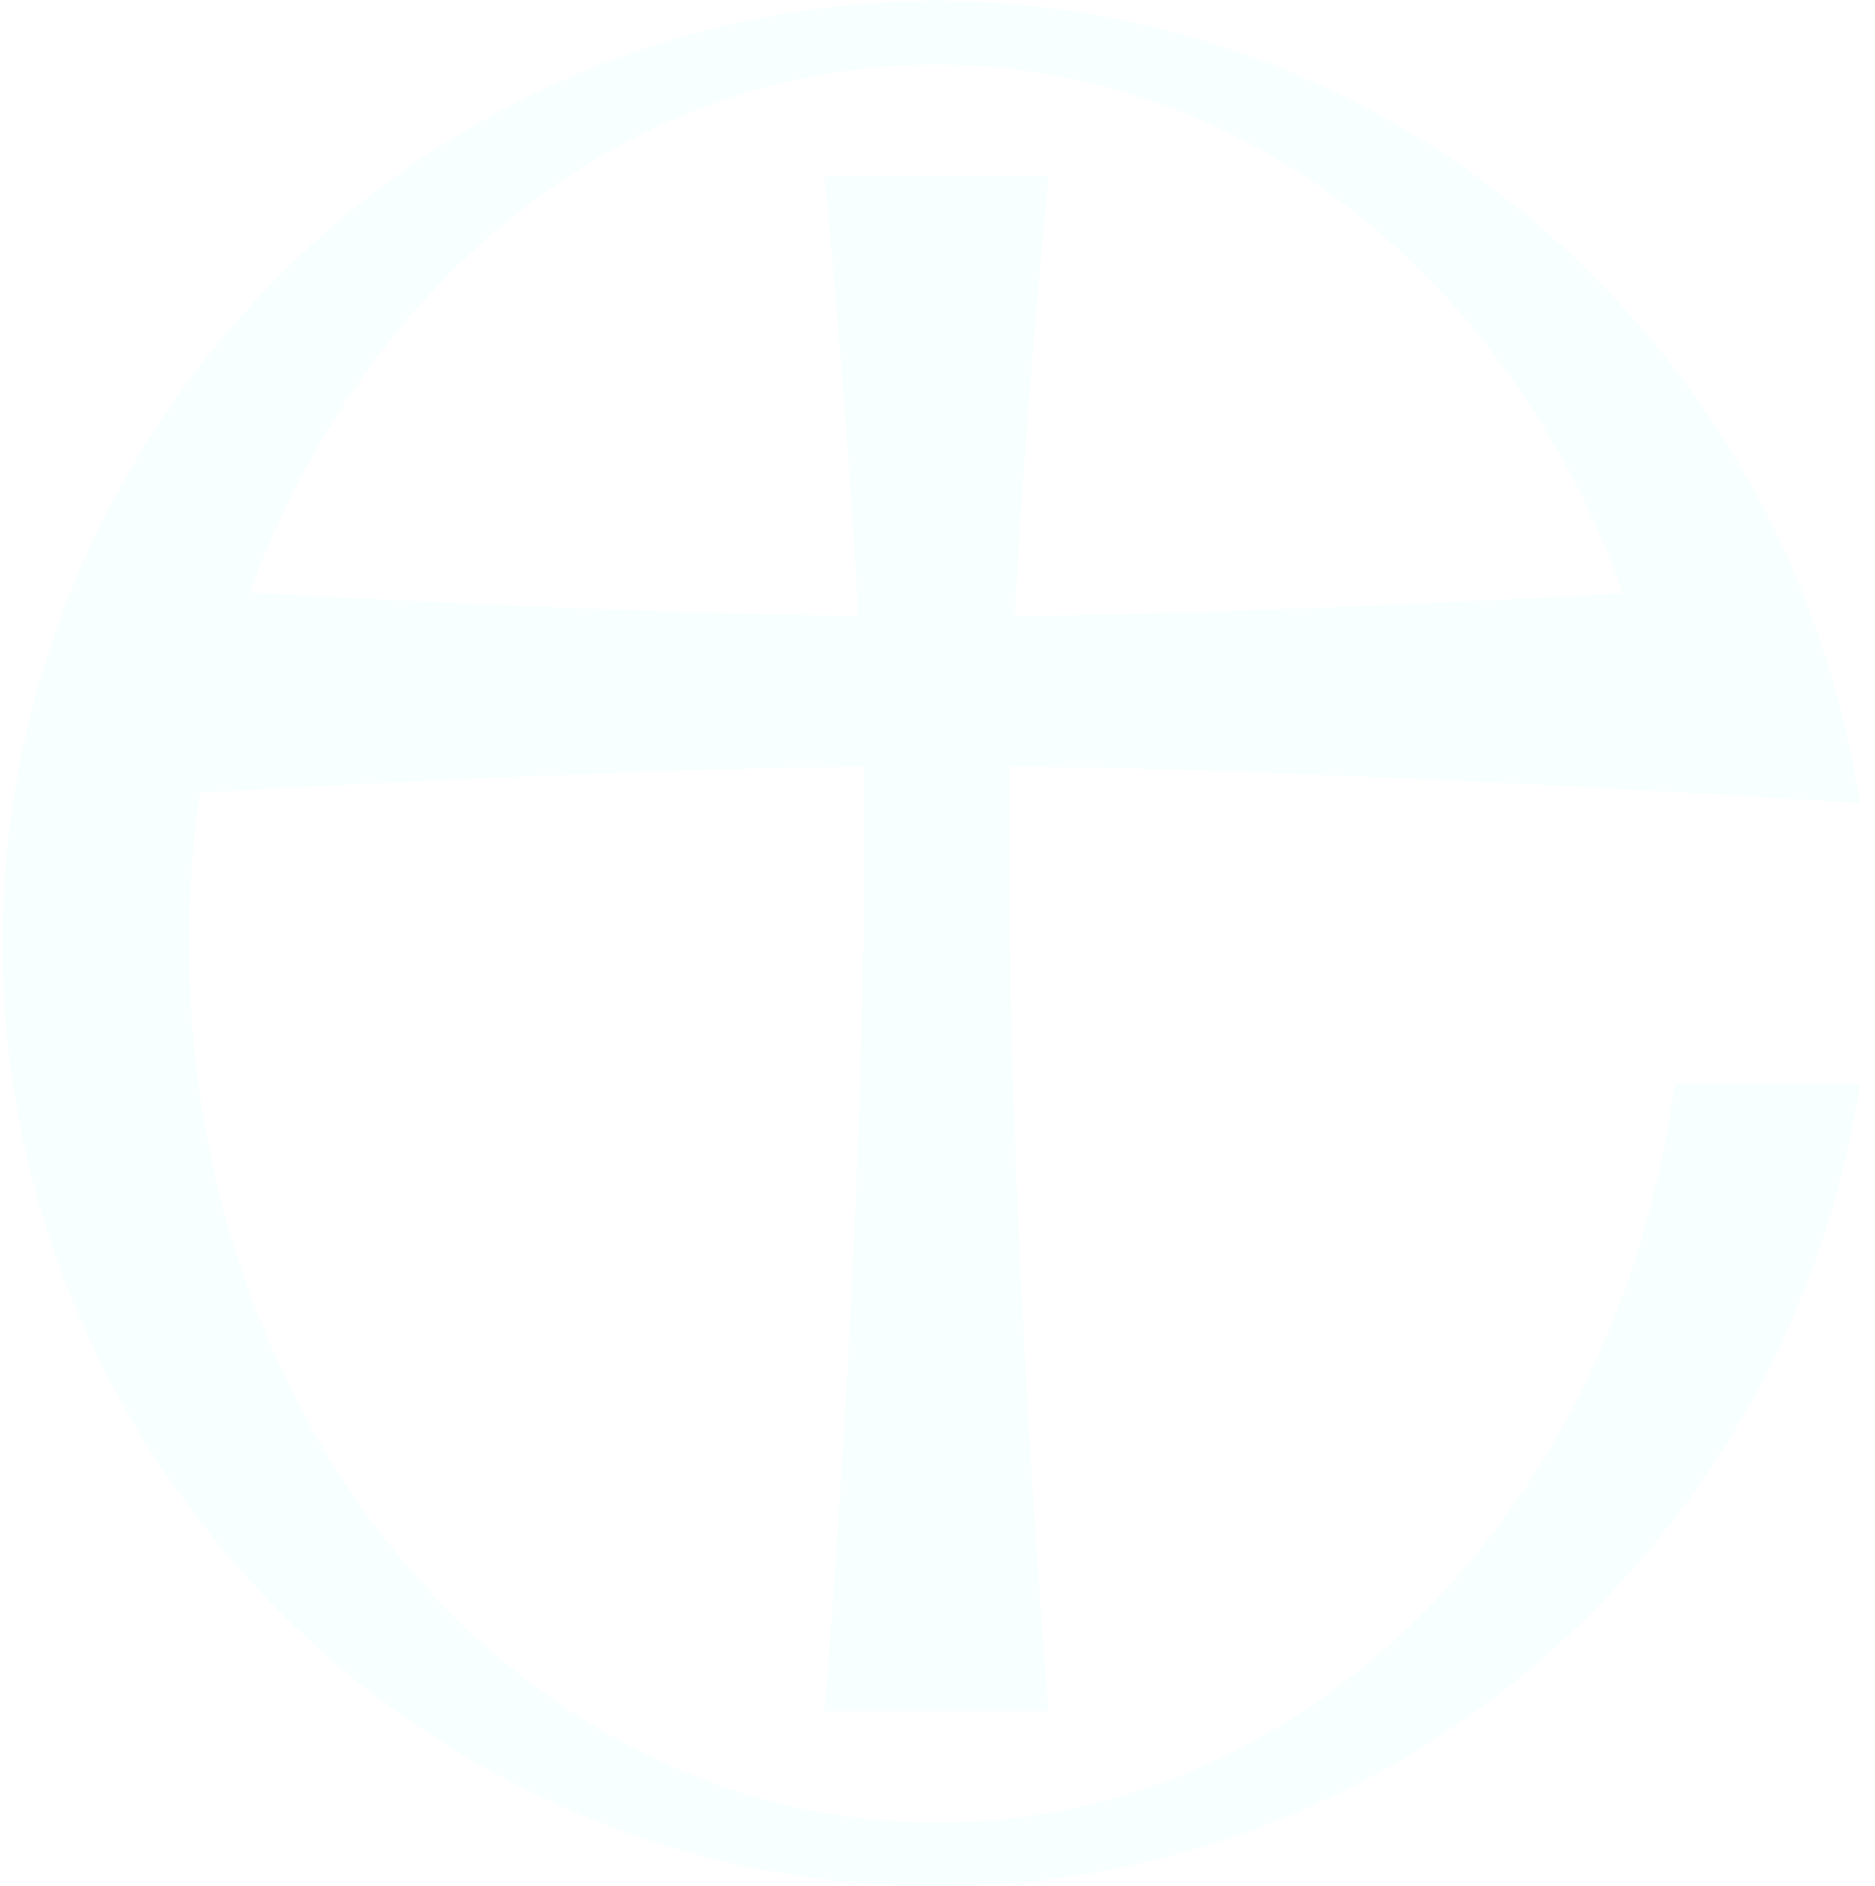 Small Church of England logo